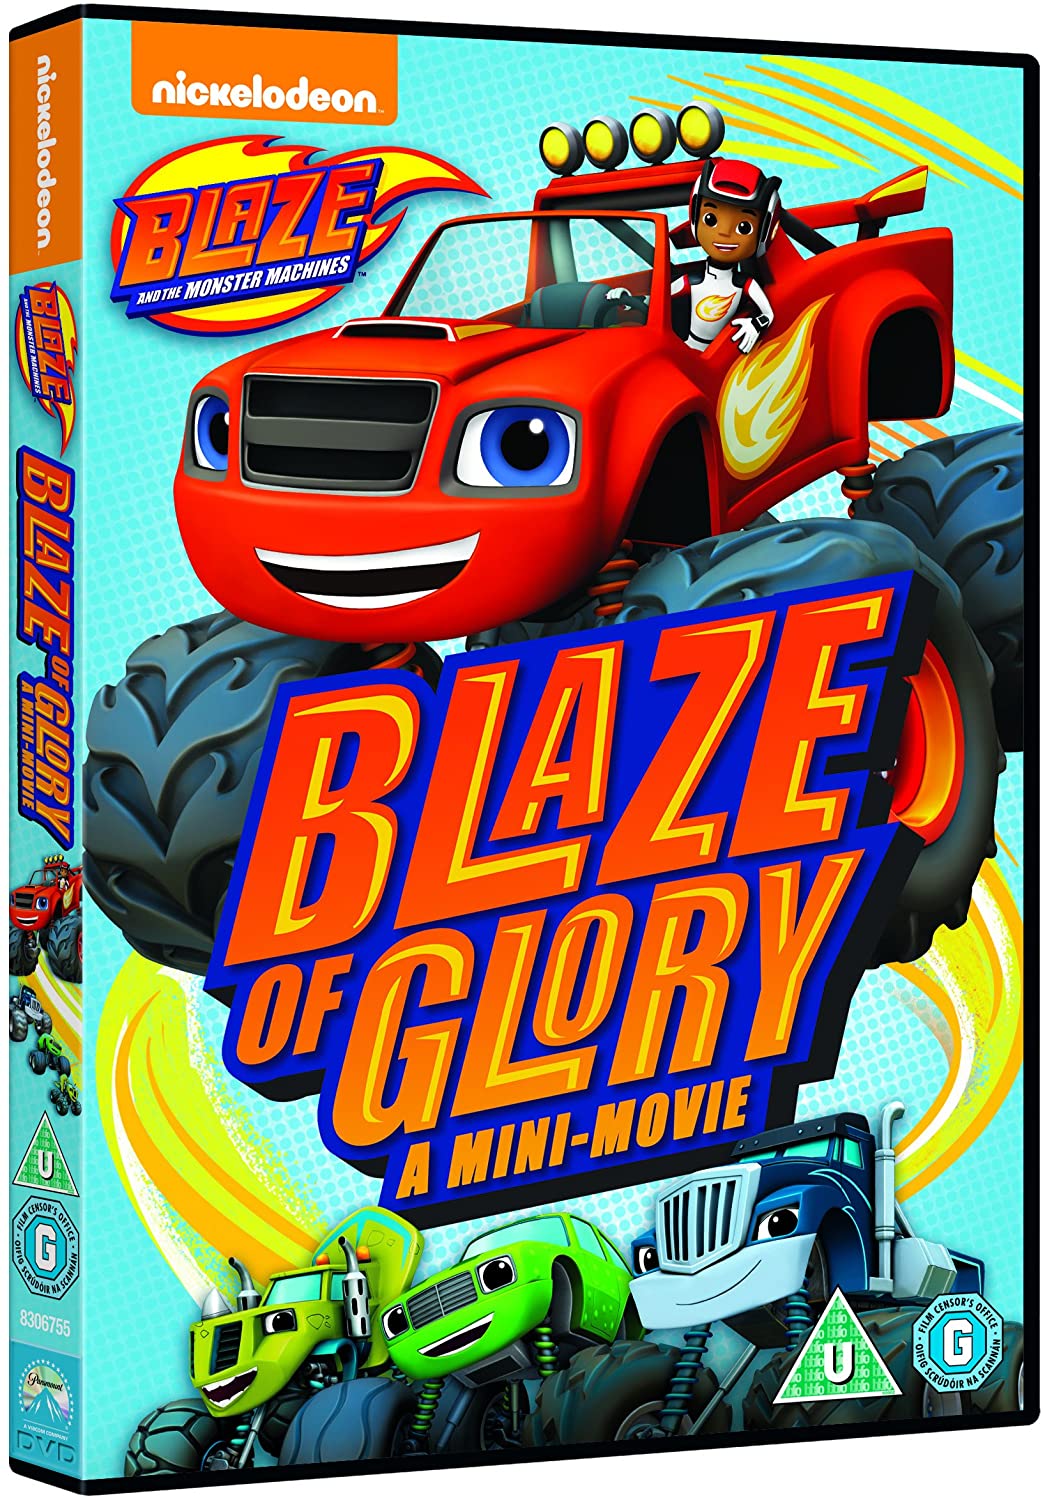 Blaze y las máquinas monstruo: Blaze Of Glory [DVD]